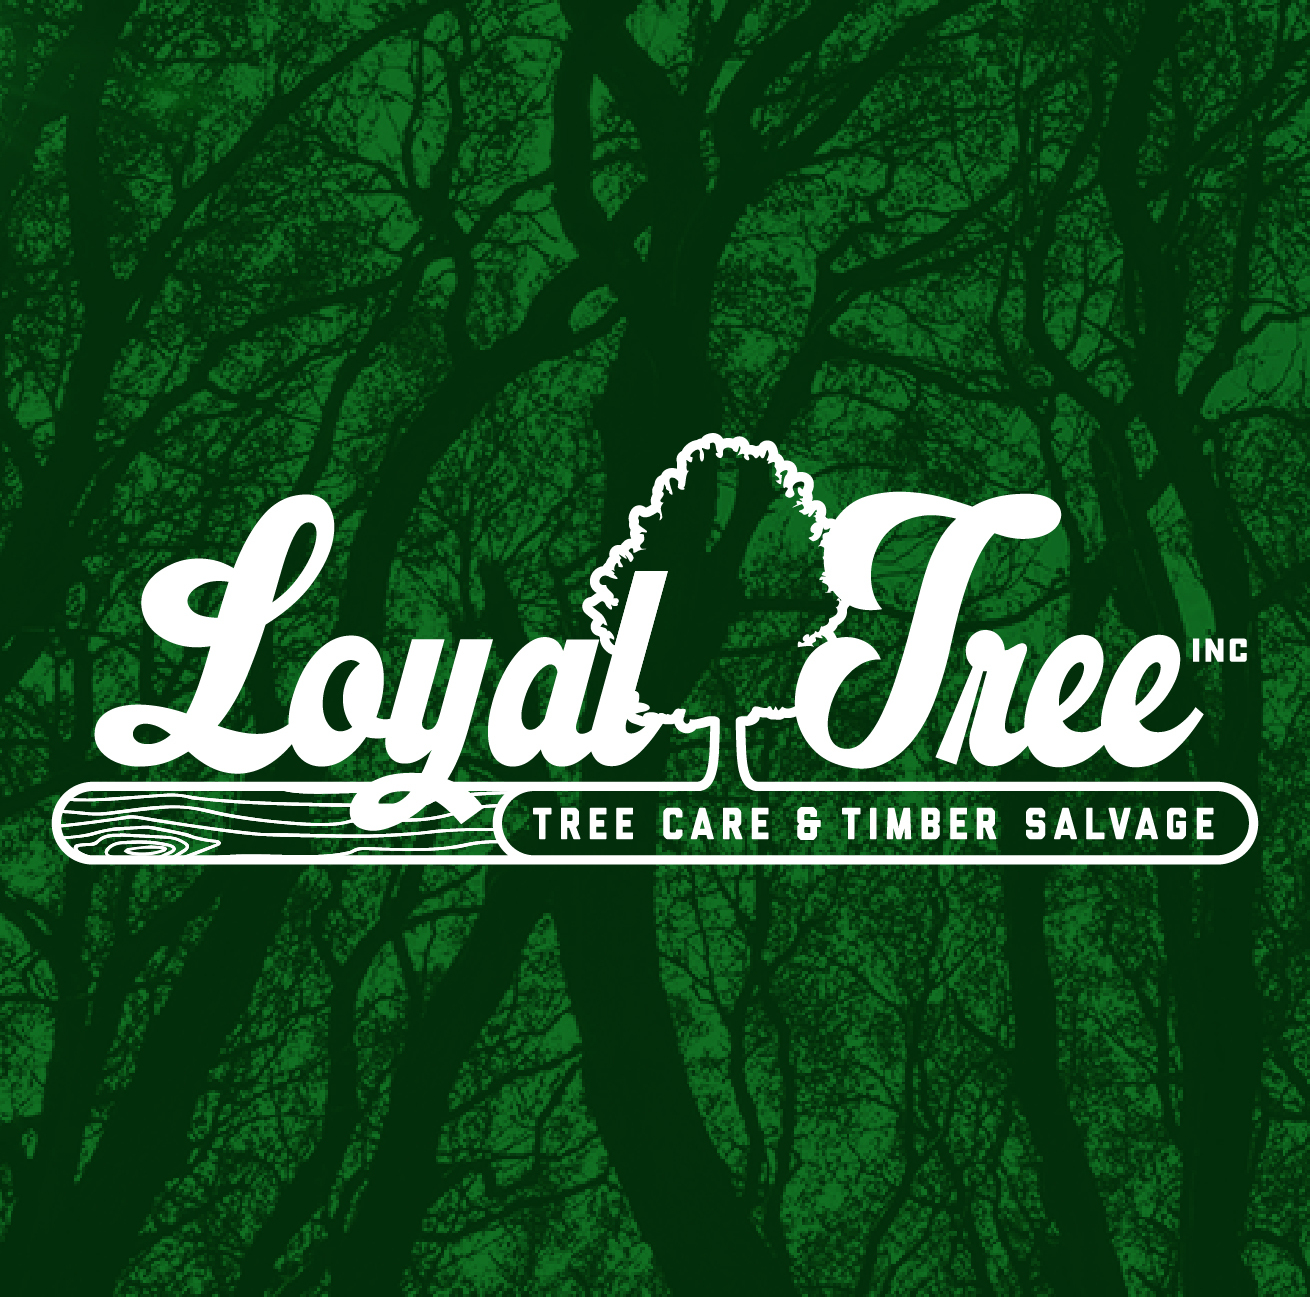 Loyal Tree Inc.'s logo